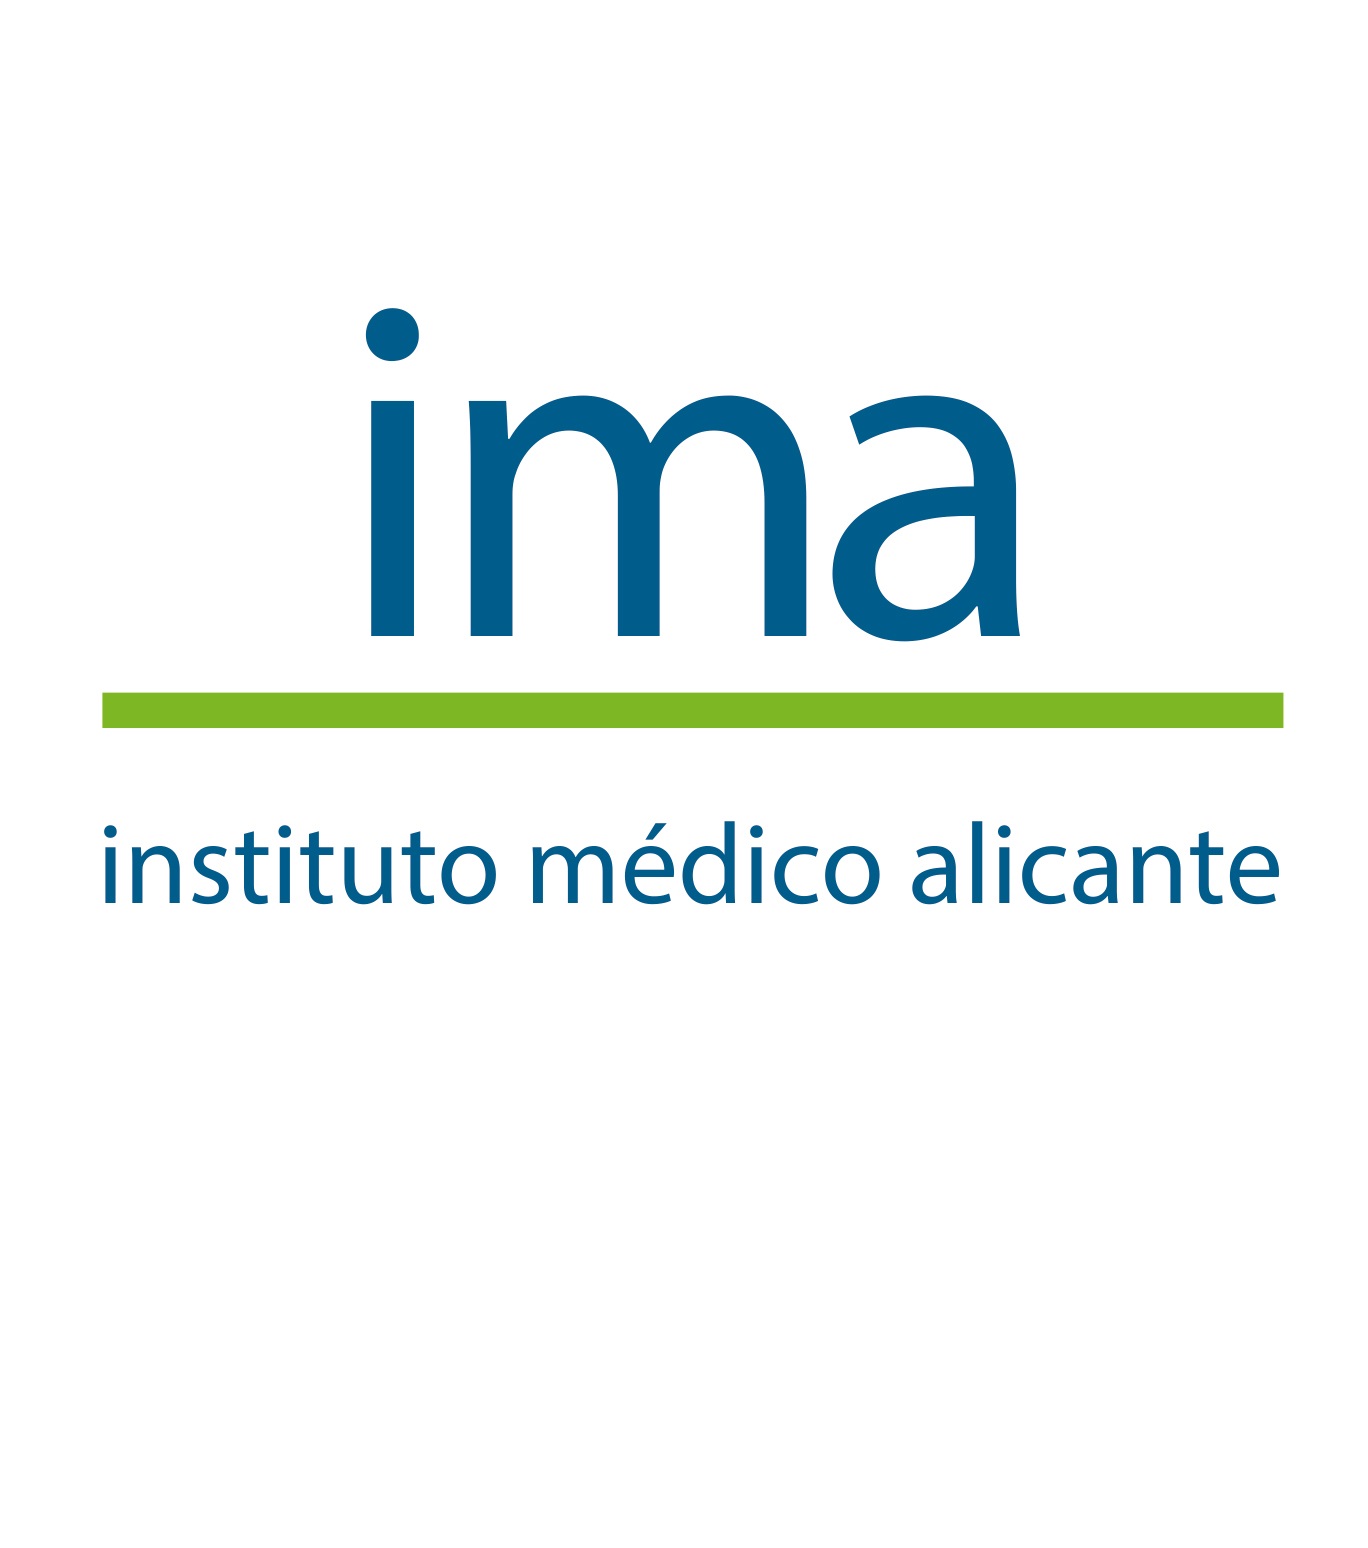 Logotipo de la clínica IMA - INSTITUTO MÉDICO ALICANTE